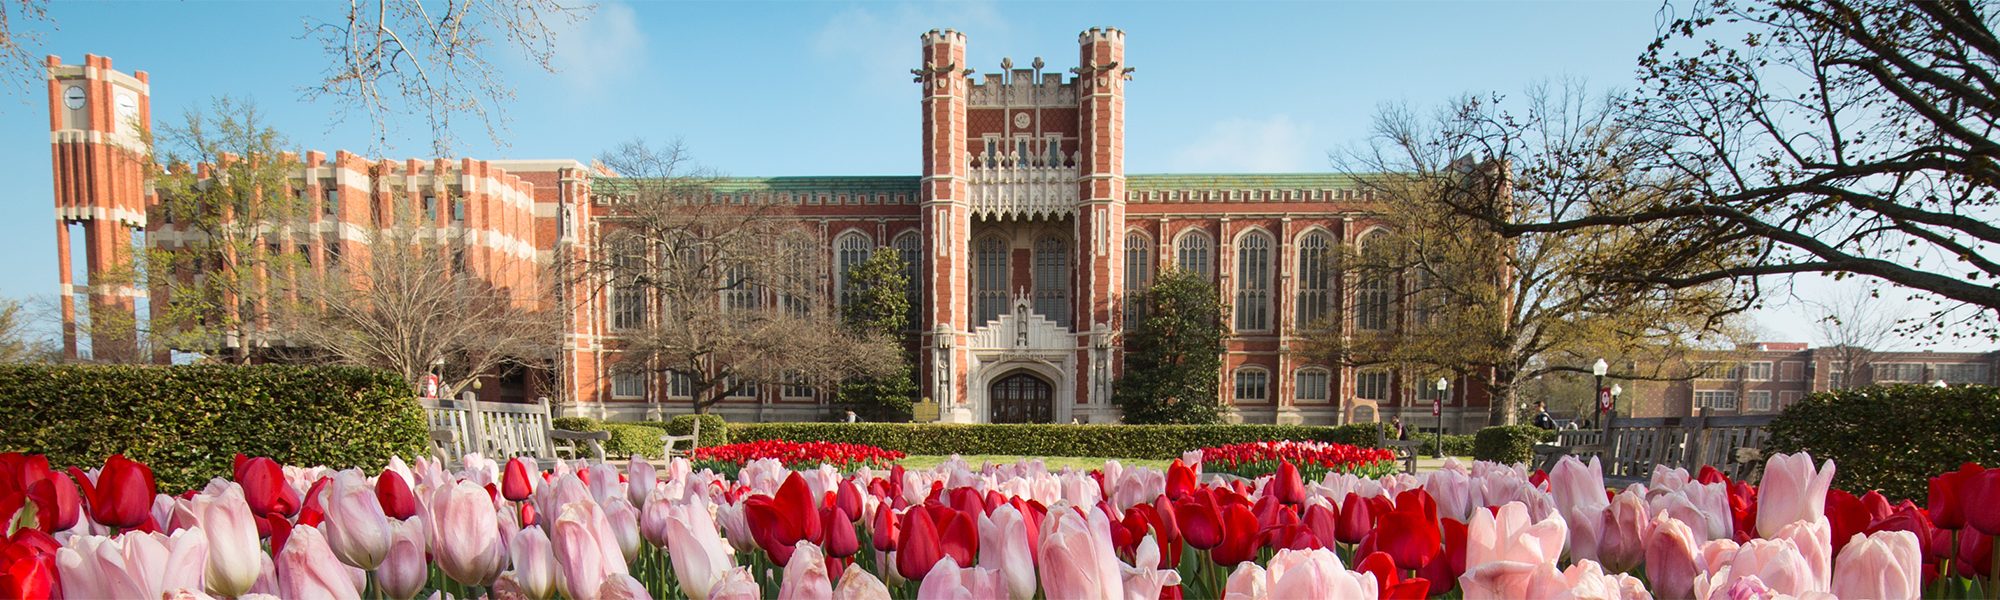 Tulips on the University of Oklahoma campus